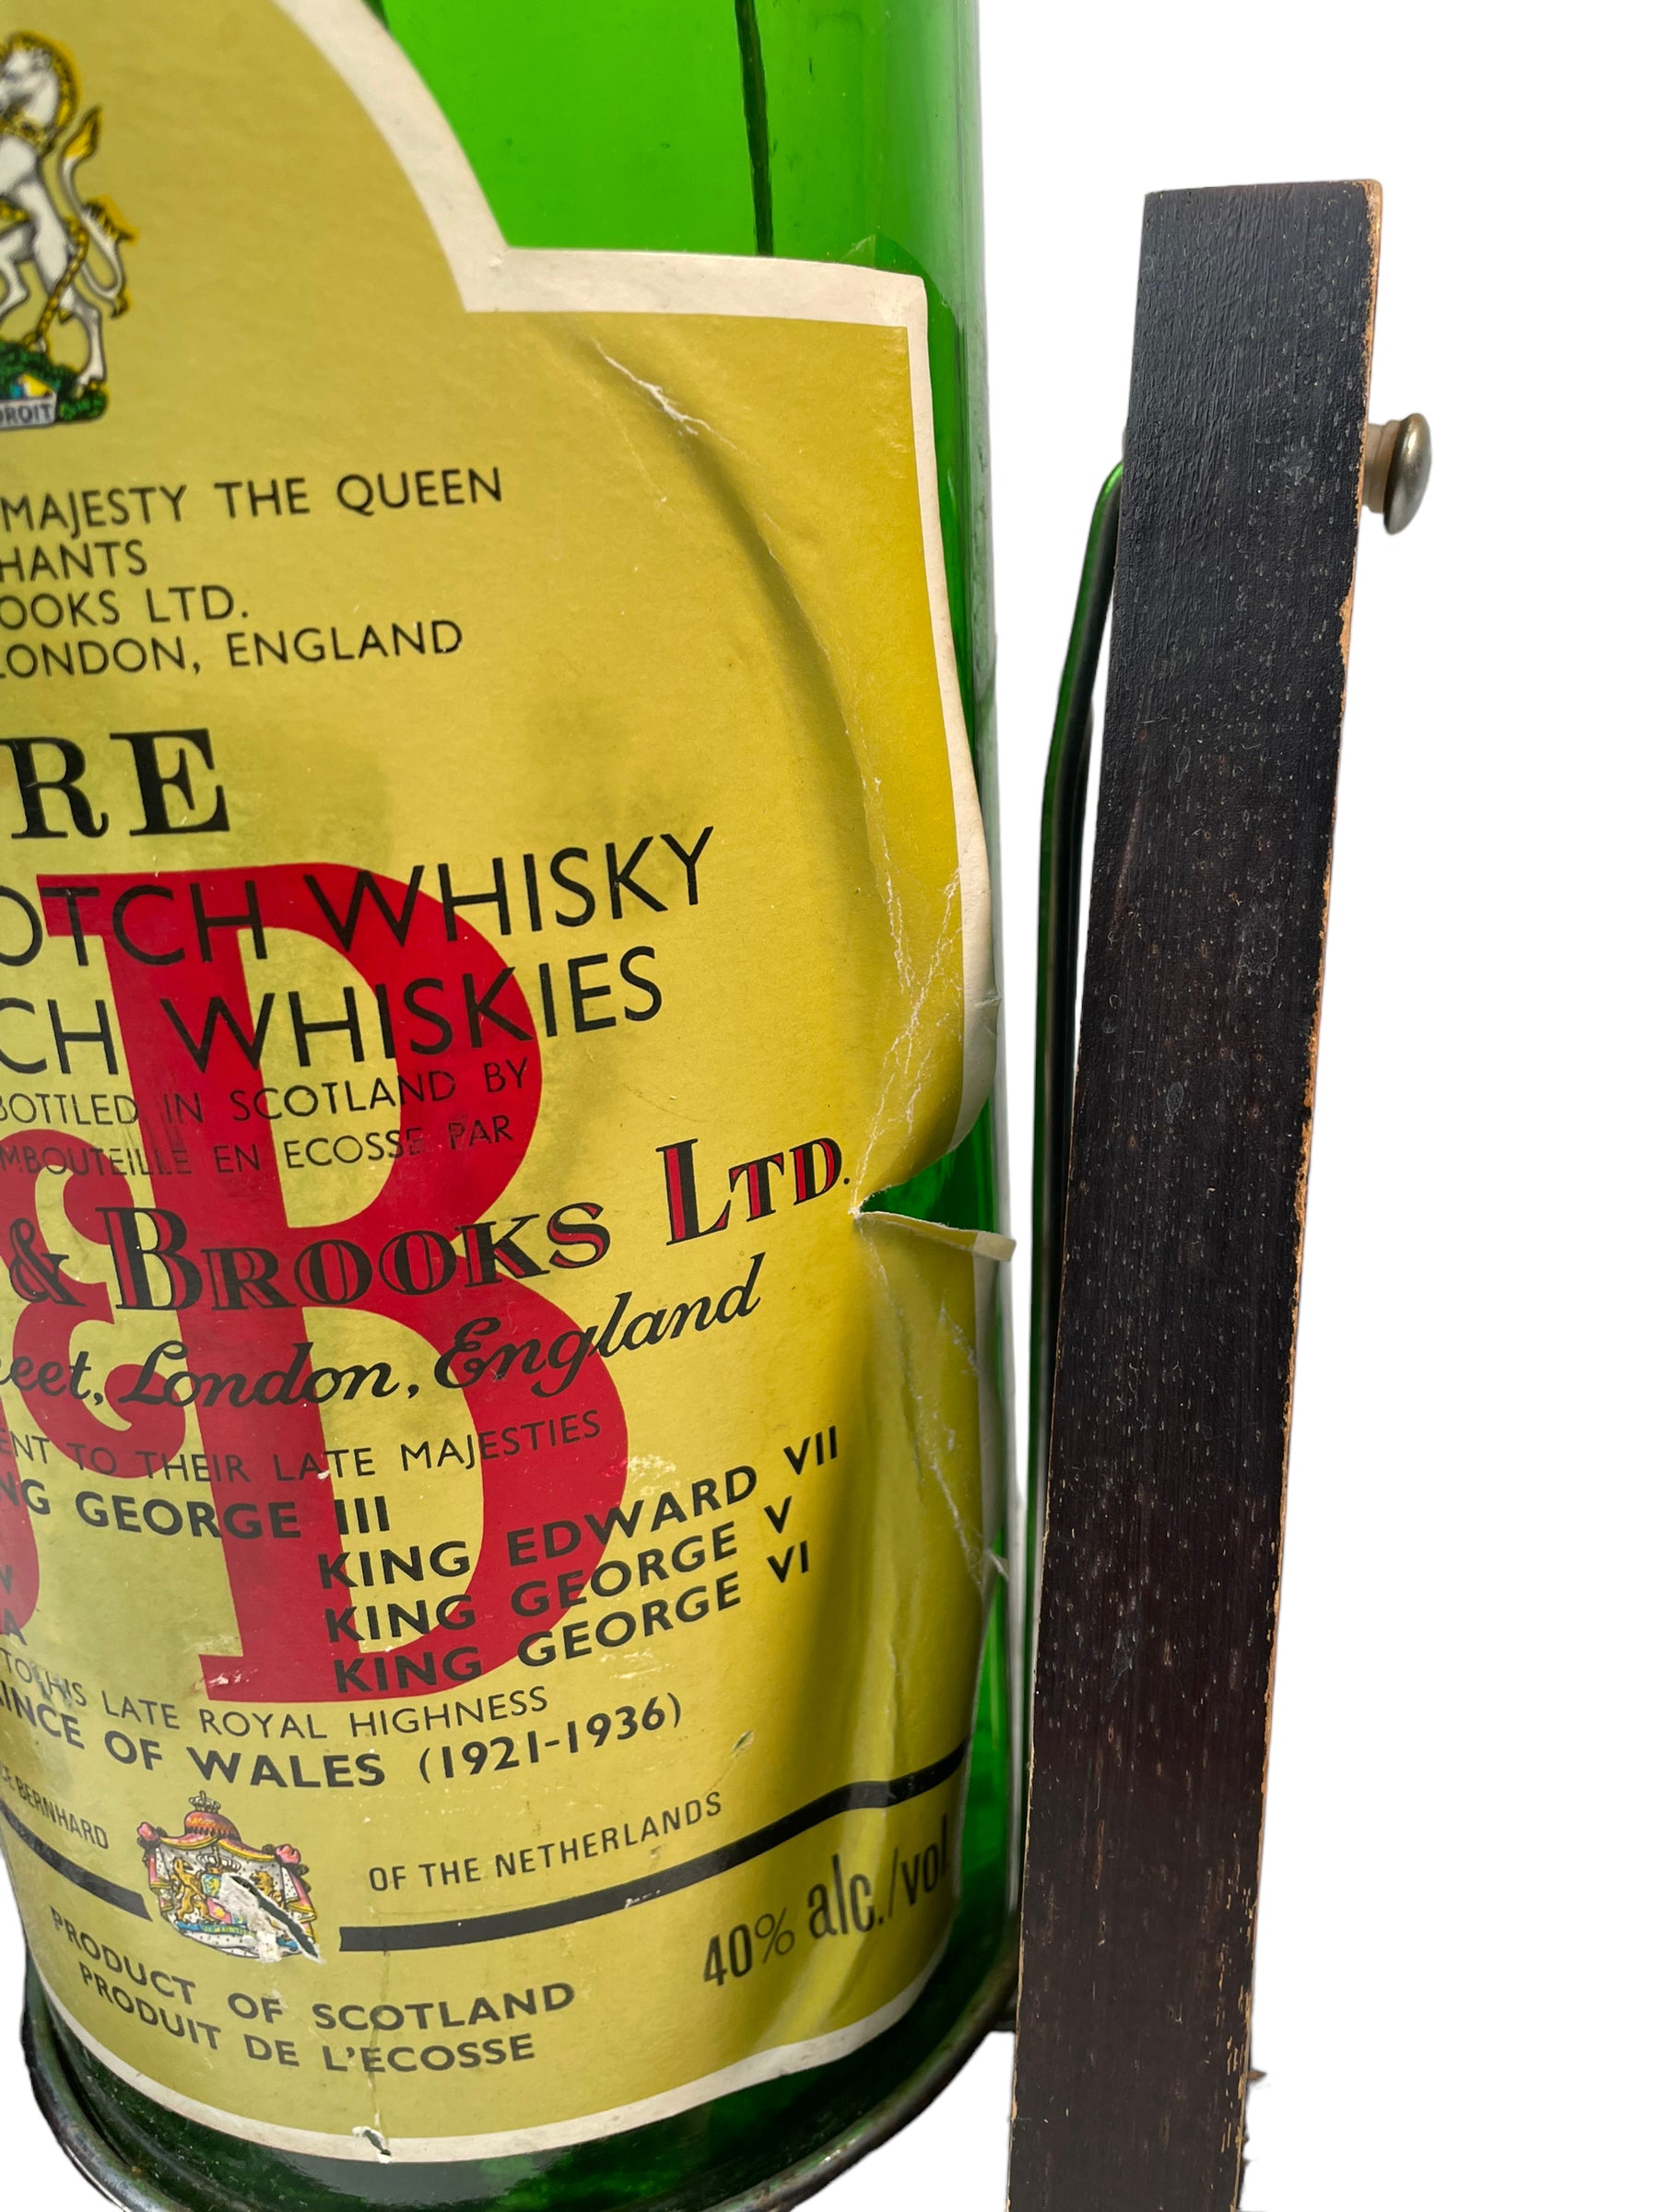 Vintage Estate Scotch Whiskey J&B 1Gal Bottle Decanter - Empty